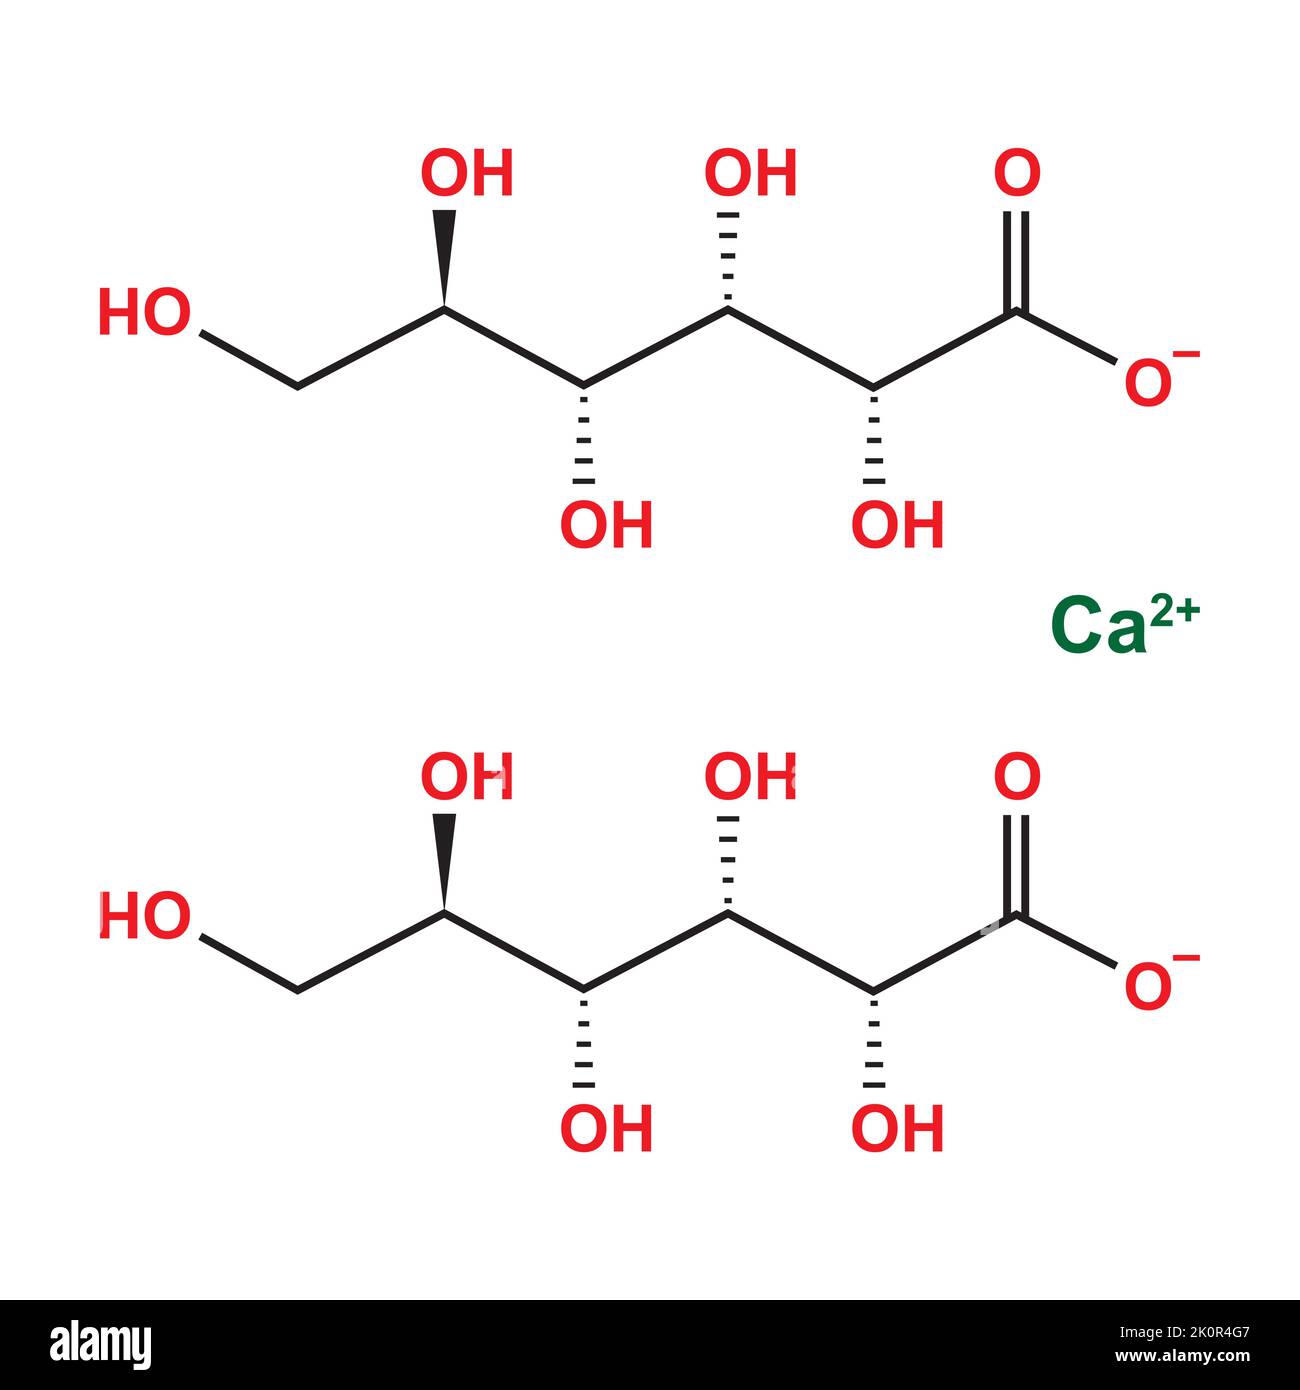 Calcium Gluconate (C12H22CaO14) Chemical Structure. Vector Illustration. Stock Vector